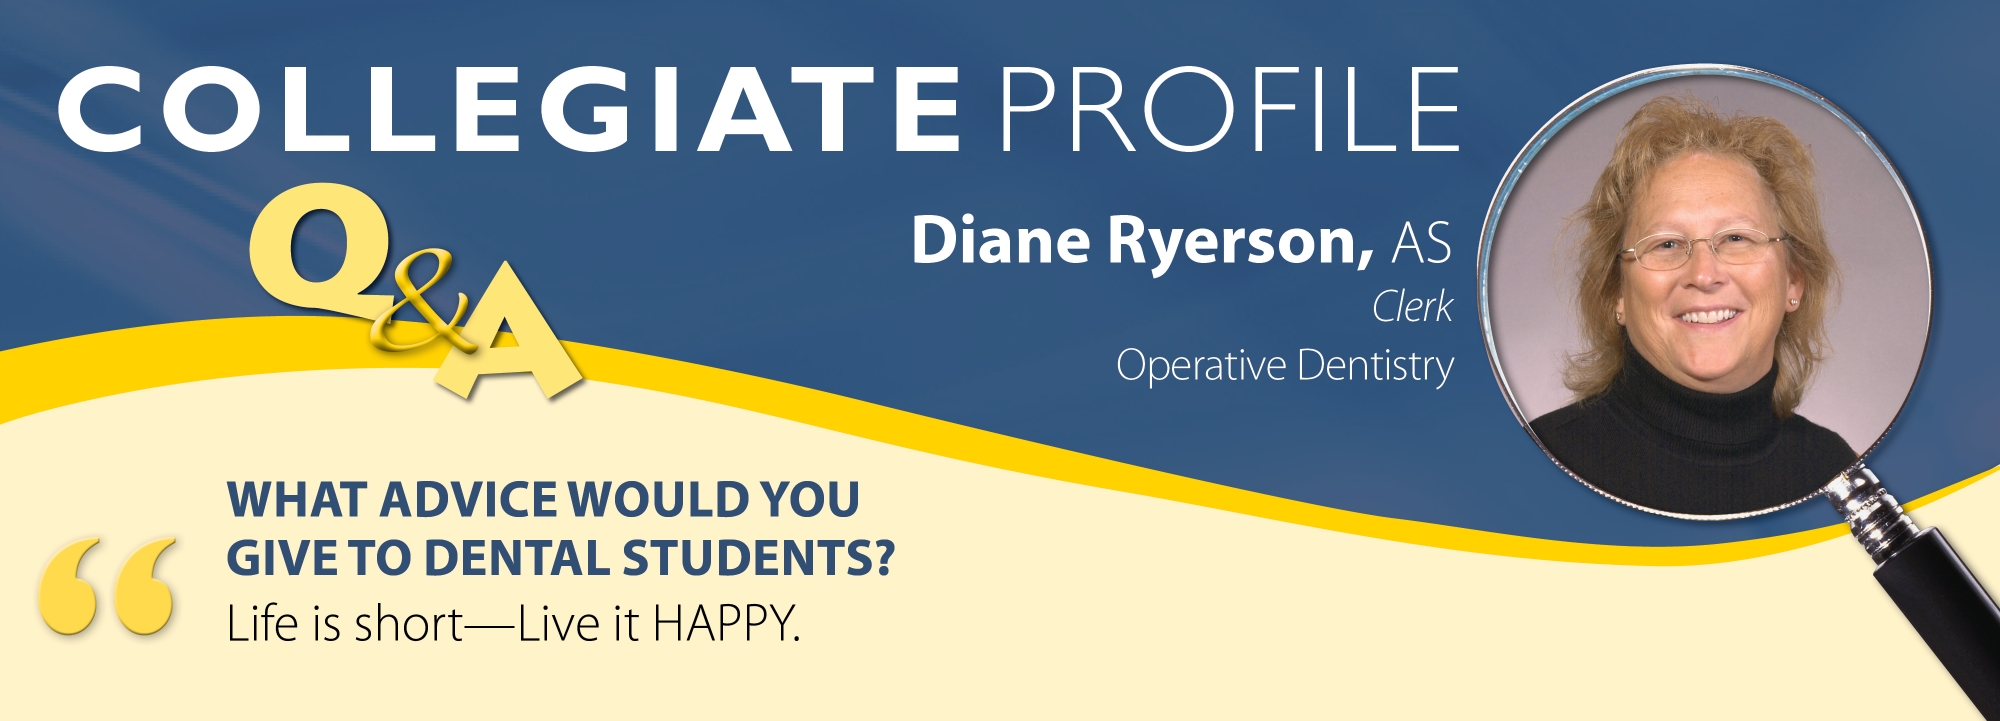 october 2016 diane ryerson collegiate profile